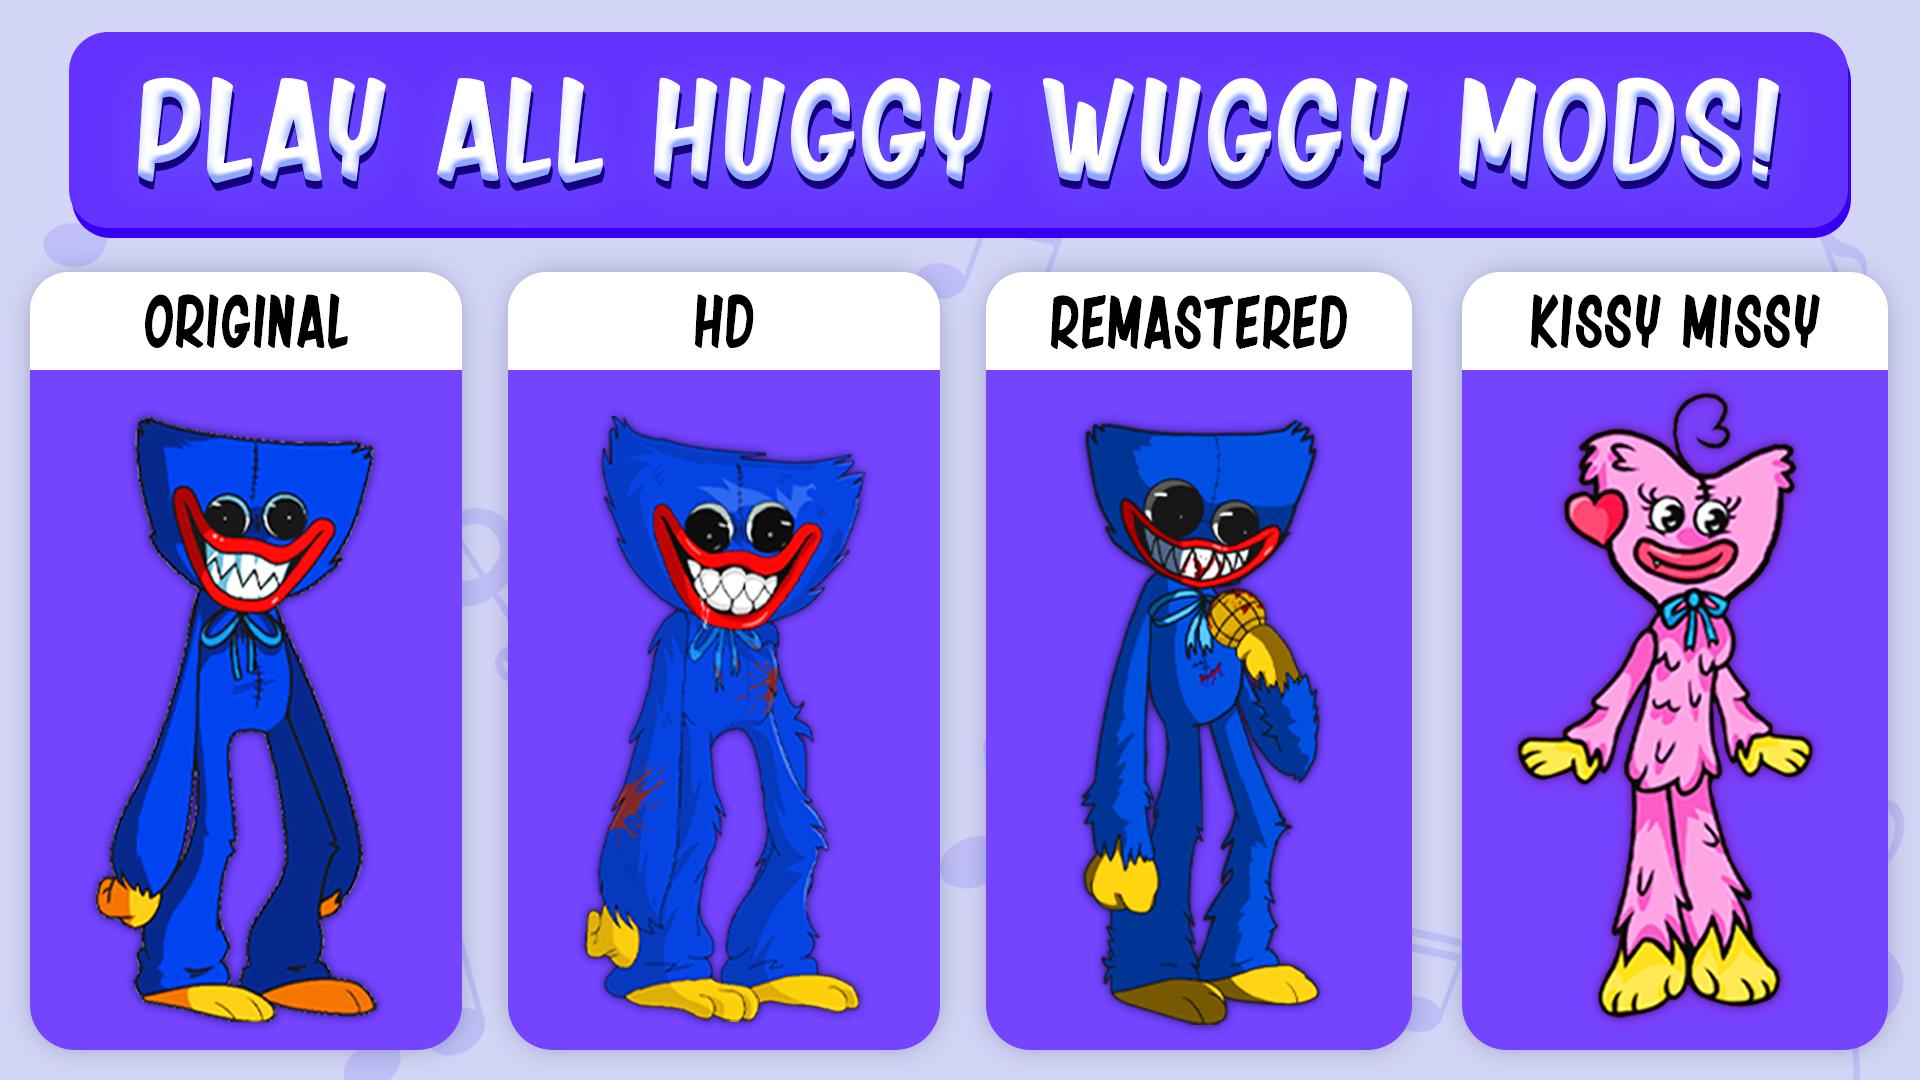 Huggy wuggy fnf